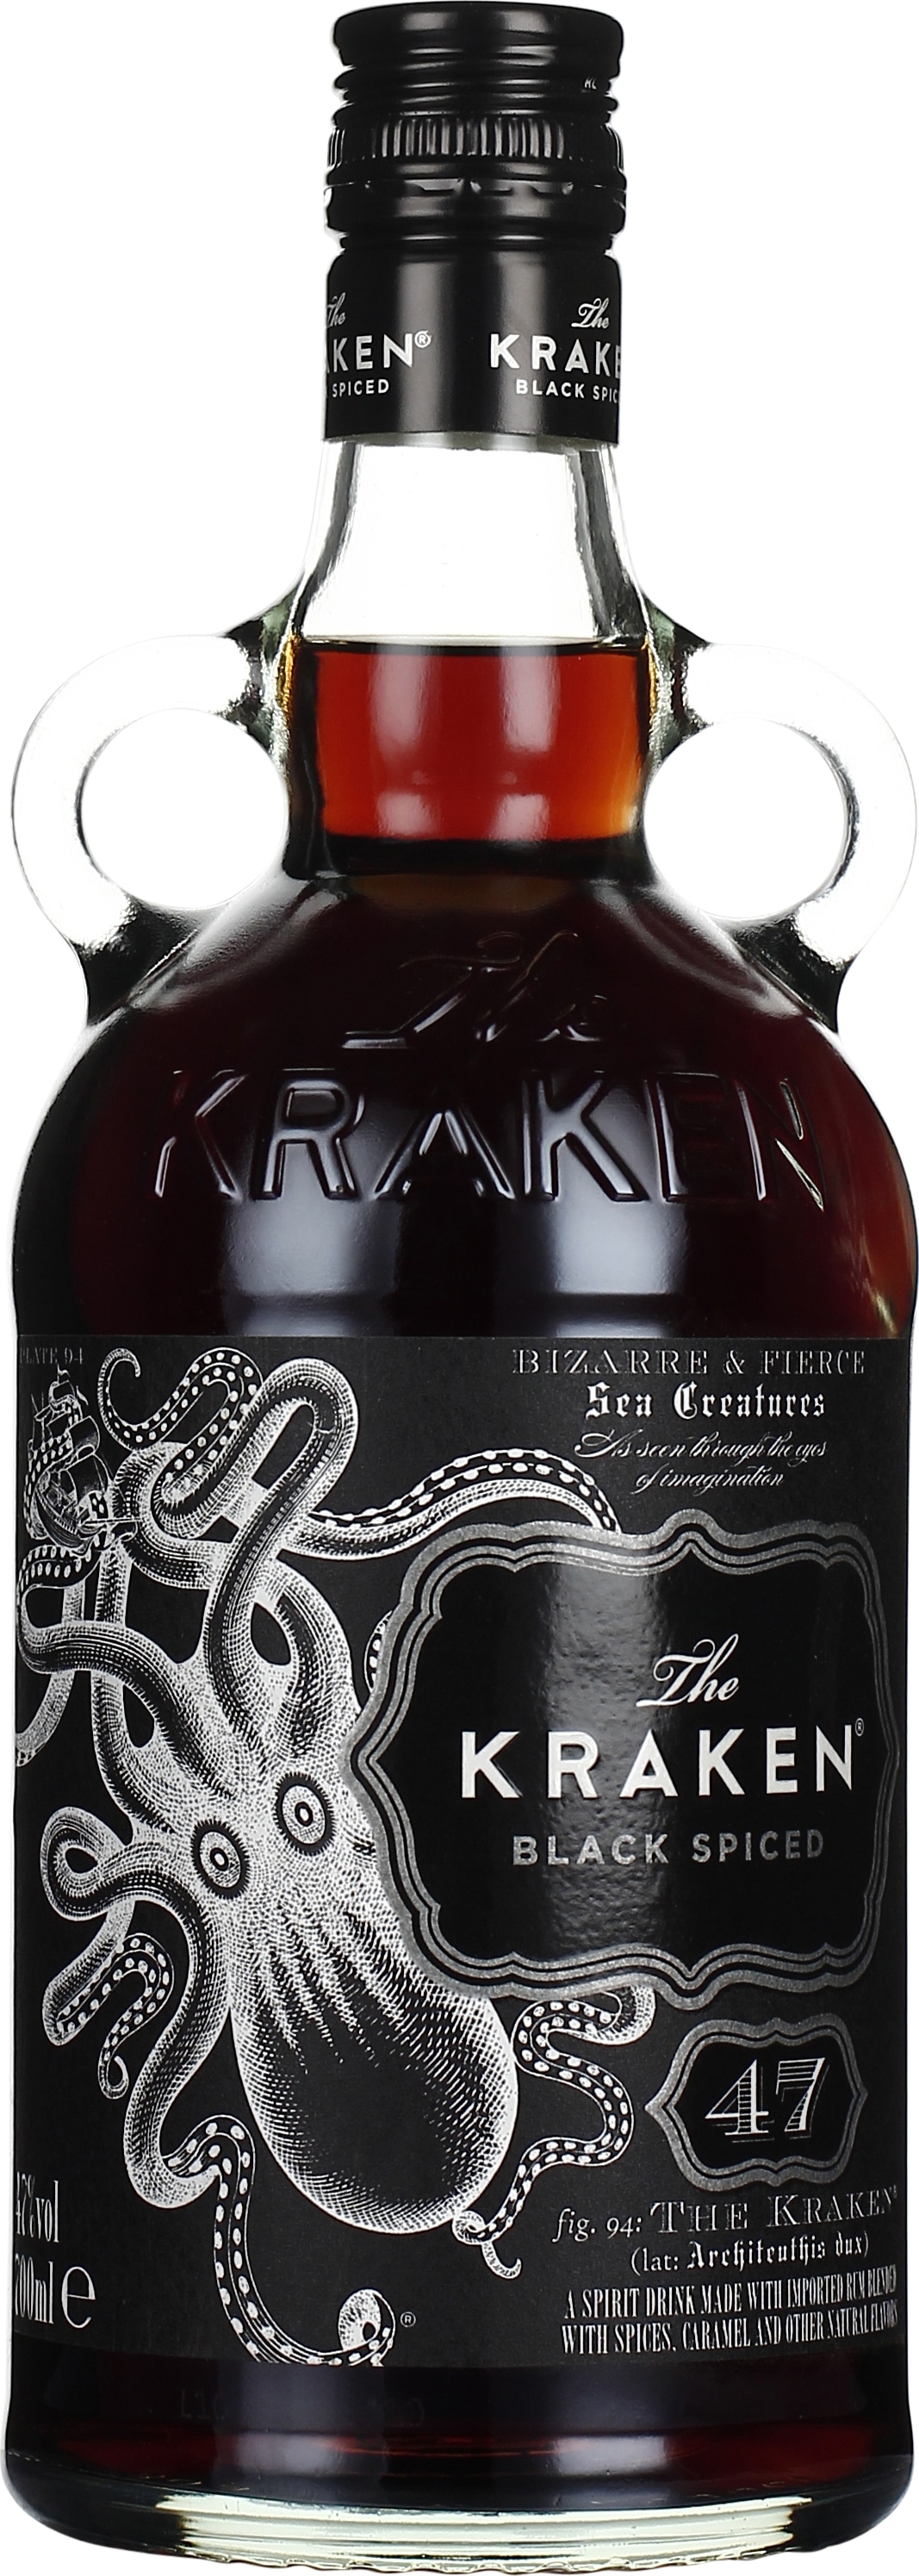 Drankdozijn The Kraken Black Spiced Rum Black Label 70CL aanbieding